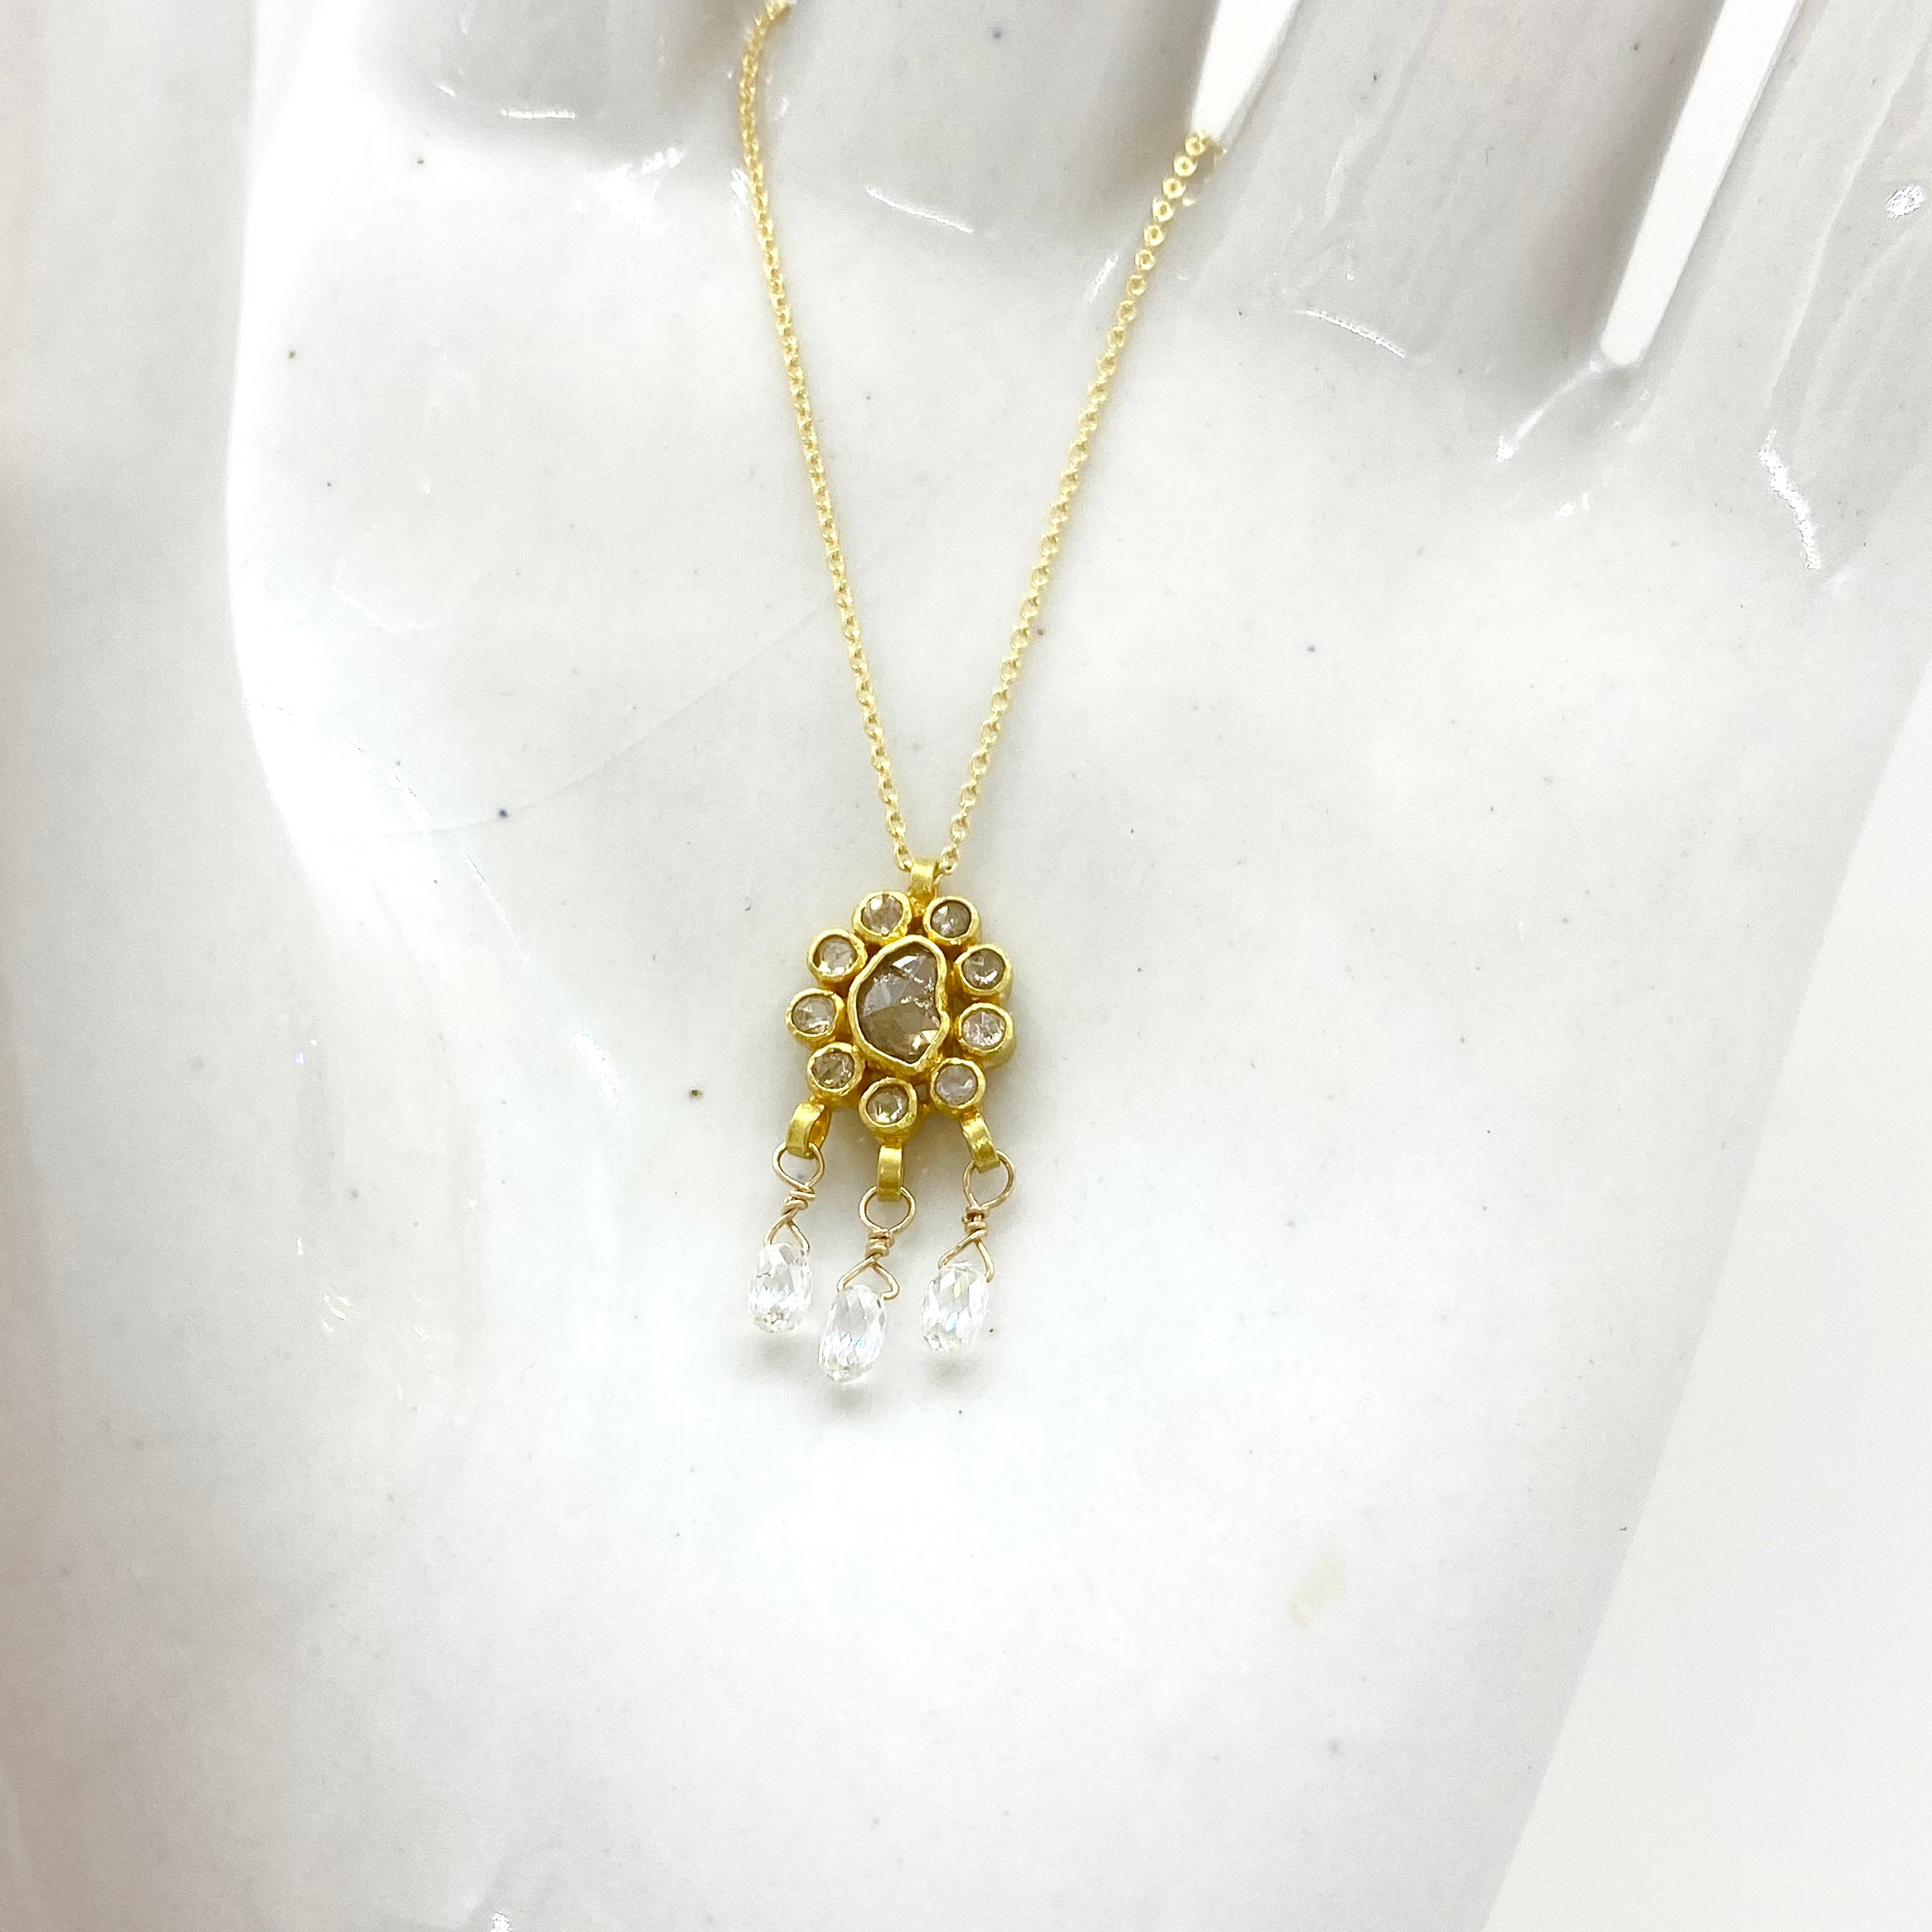 14K Gold Chain Necklace w/ 18k Gold Diamond Pendant & Diamonds